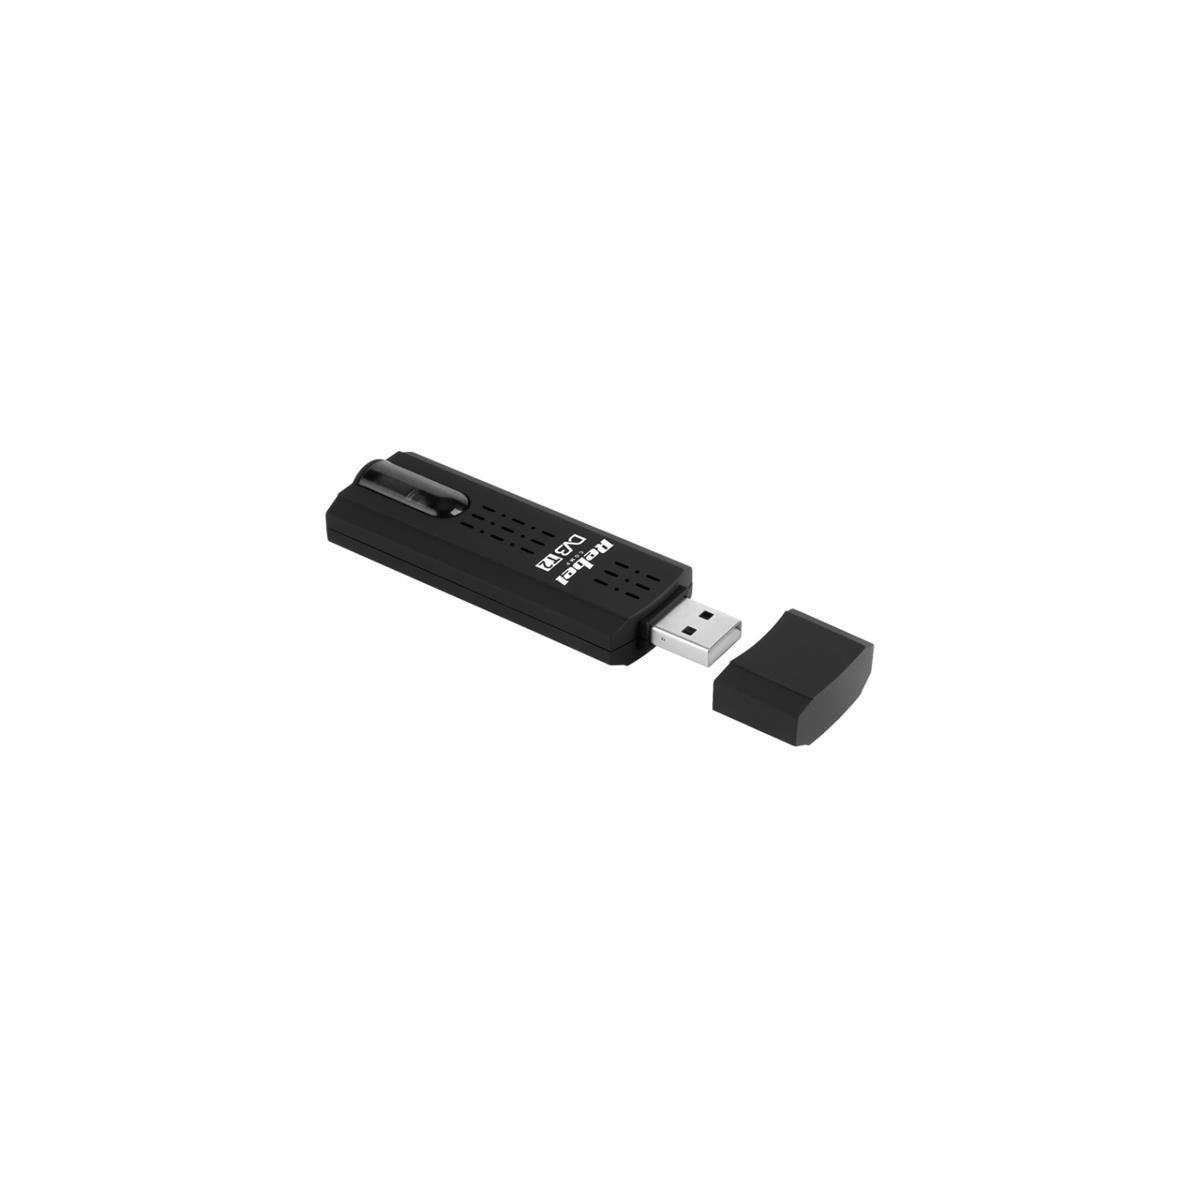 Set-top box USB REBEL KOM1060